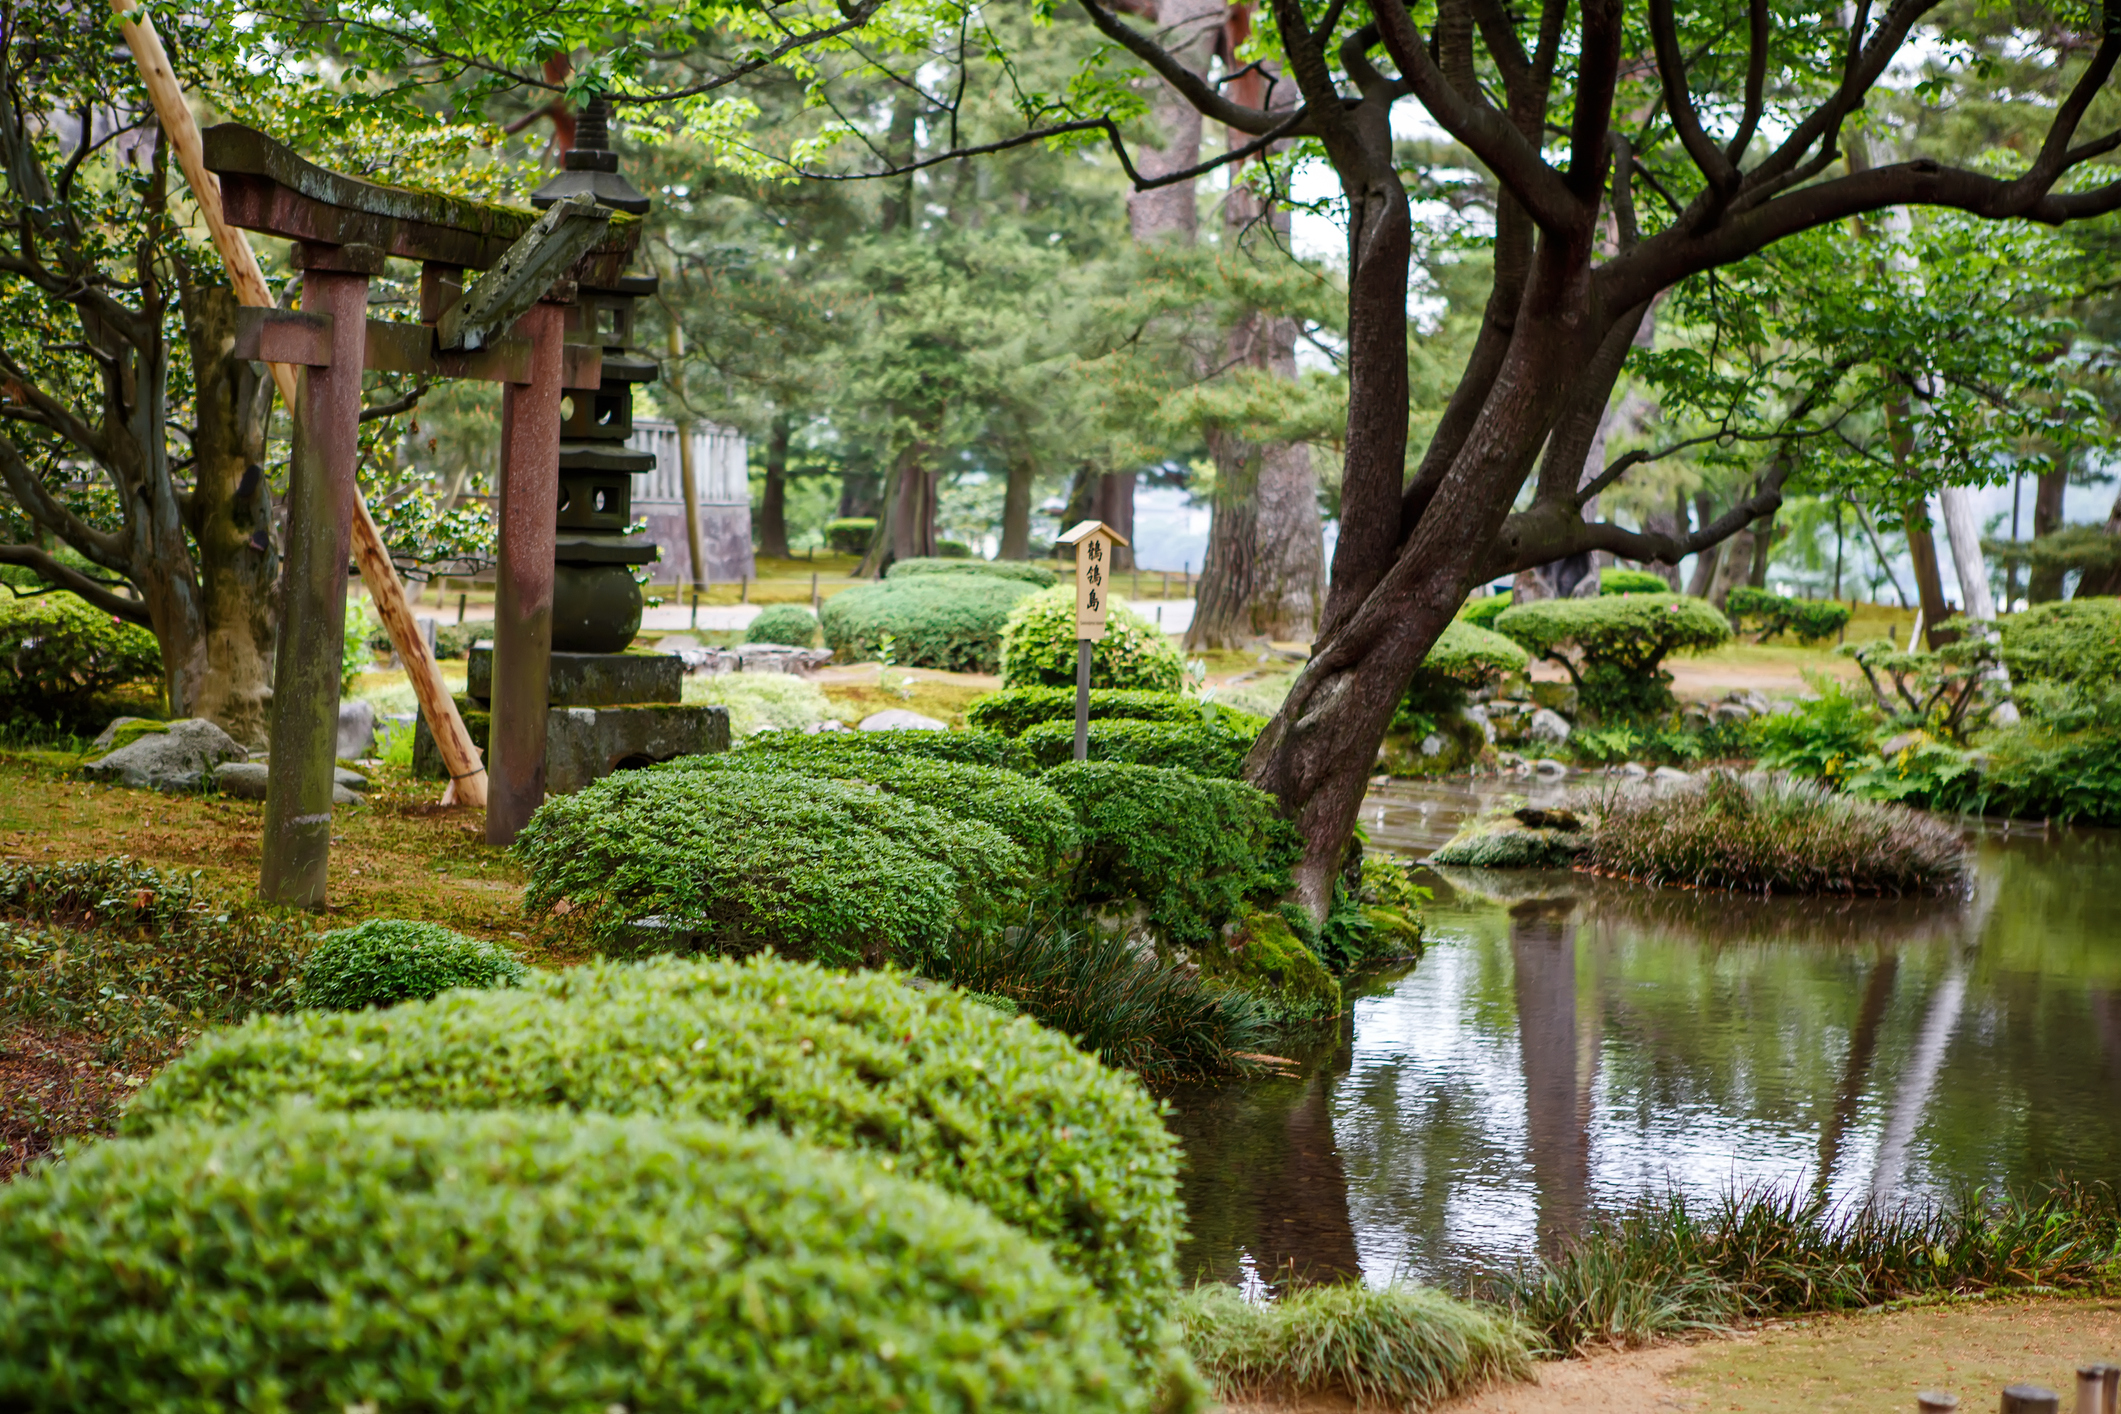 Kenroku-en garden, located in Kanazawa, Ishikawa, Japan, is an old japanese traditional garden. Along with Kairaku-en and Koraku-en, Kenroku-en is one of the Three Great Gardens of Japan.